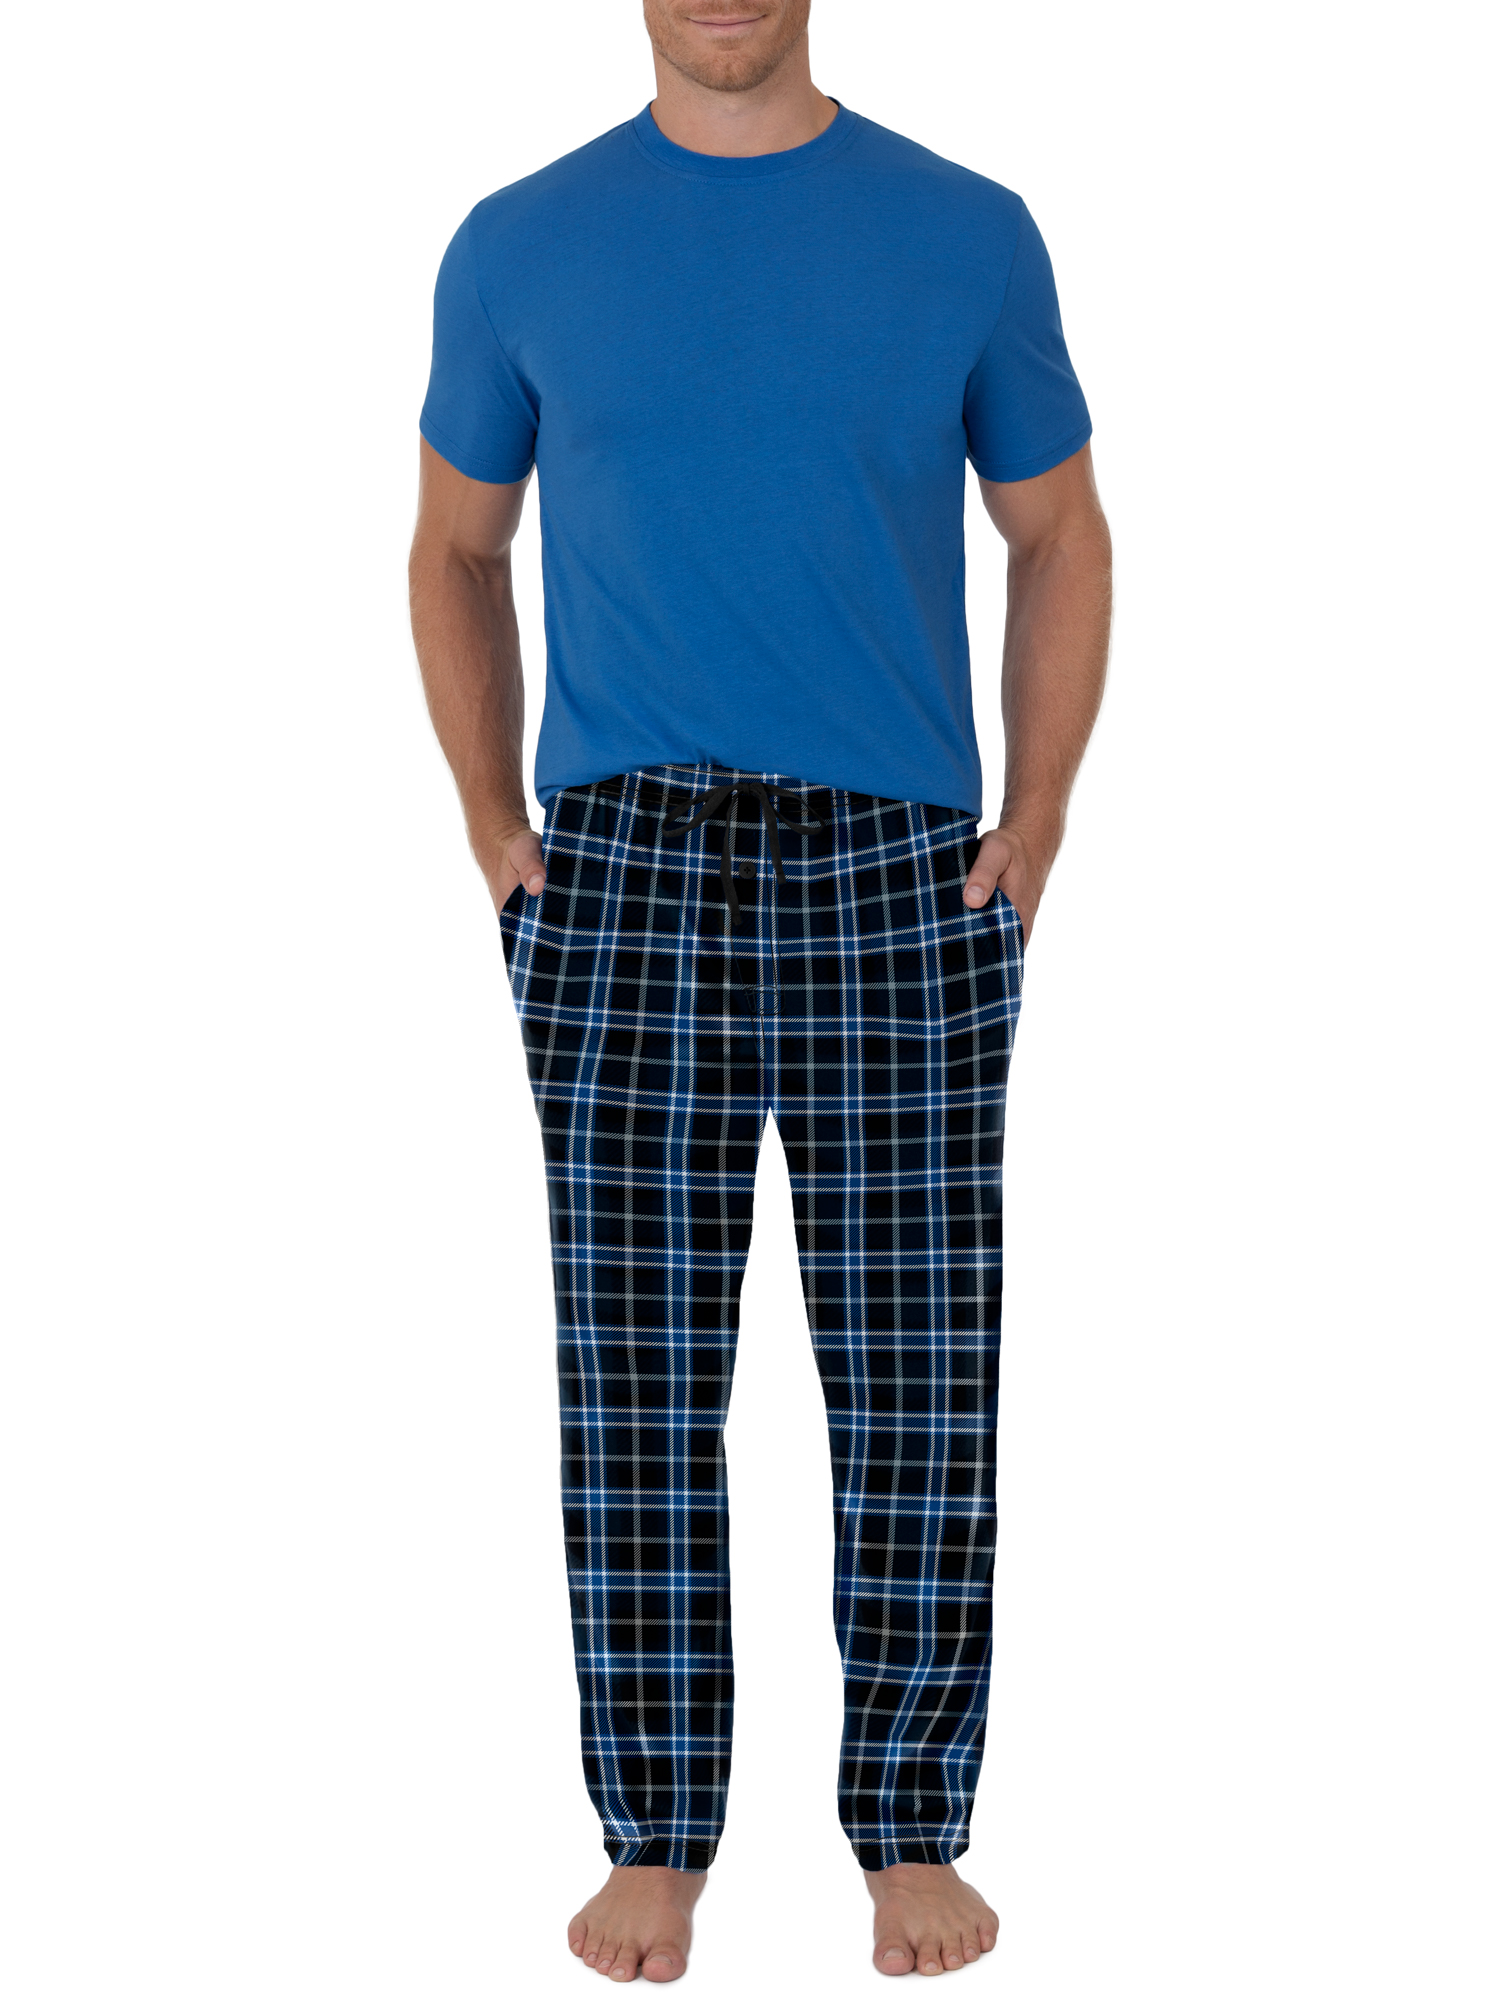 Fruit Of The Loom Men's Short Sleeve Crew Neck Top and Fleece Pajama Pant Set - image 1 of 5